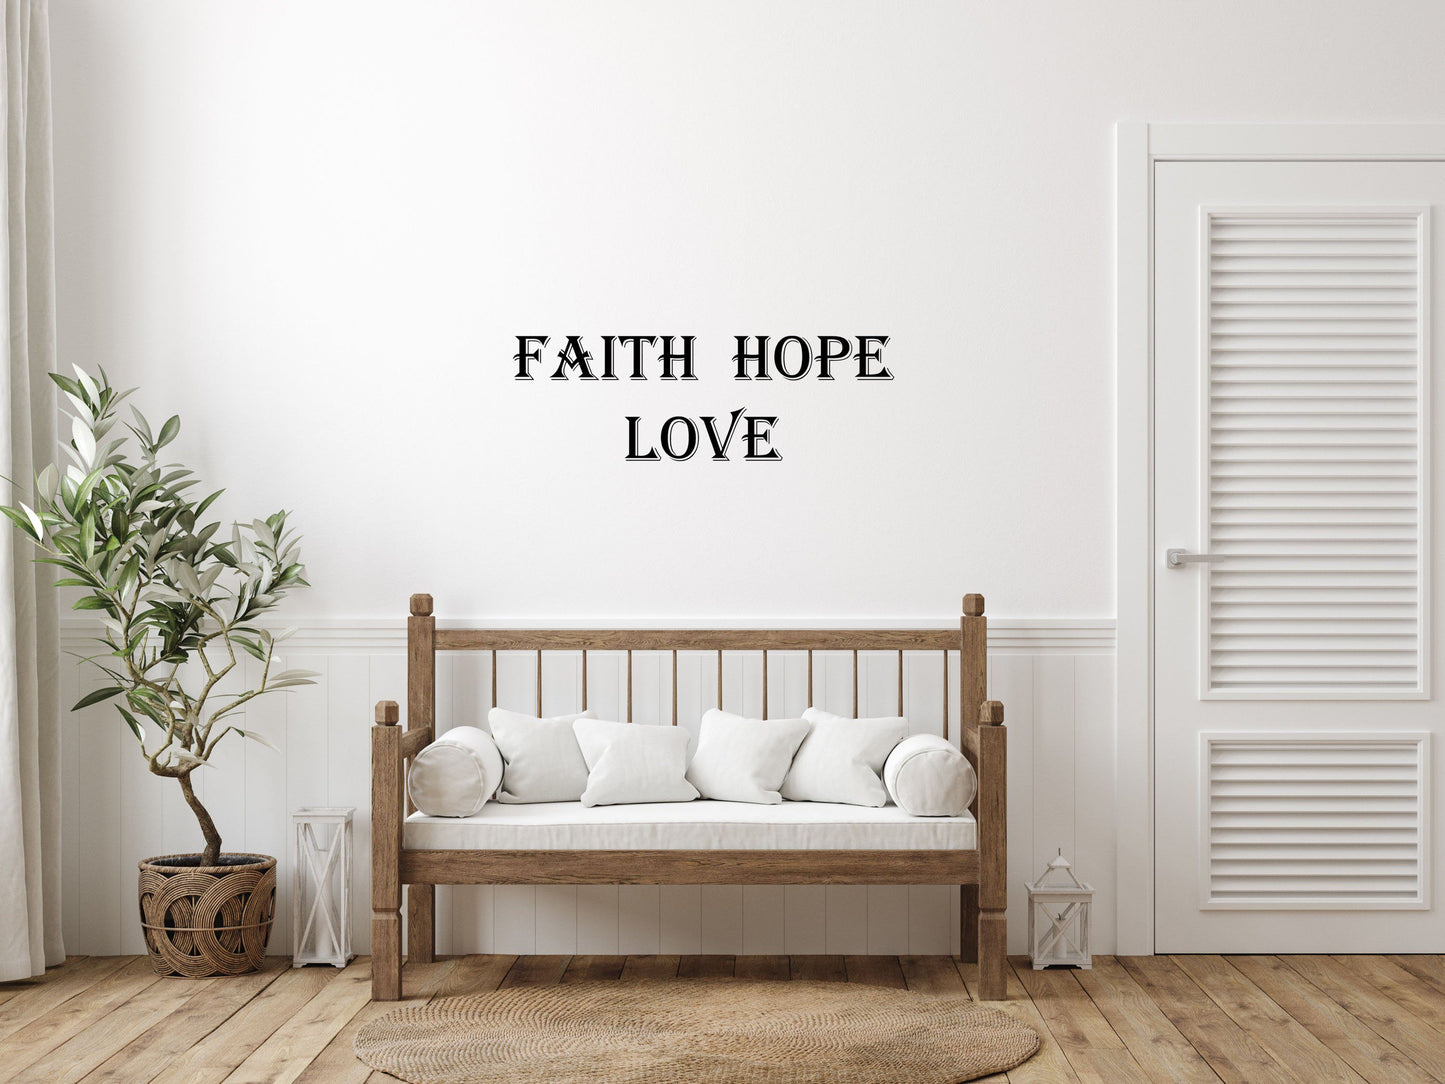 Faith, Hope, Love - Inspirational Wall Decals Vinyl Wall Decal Inspirational Wall Signs 